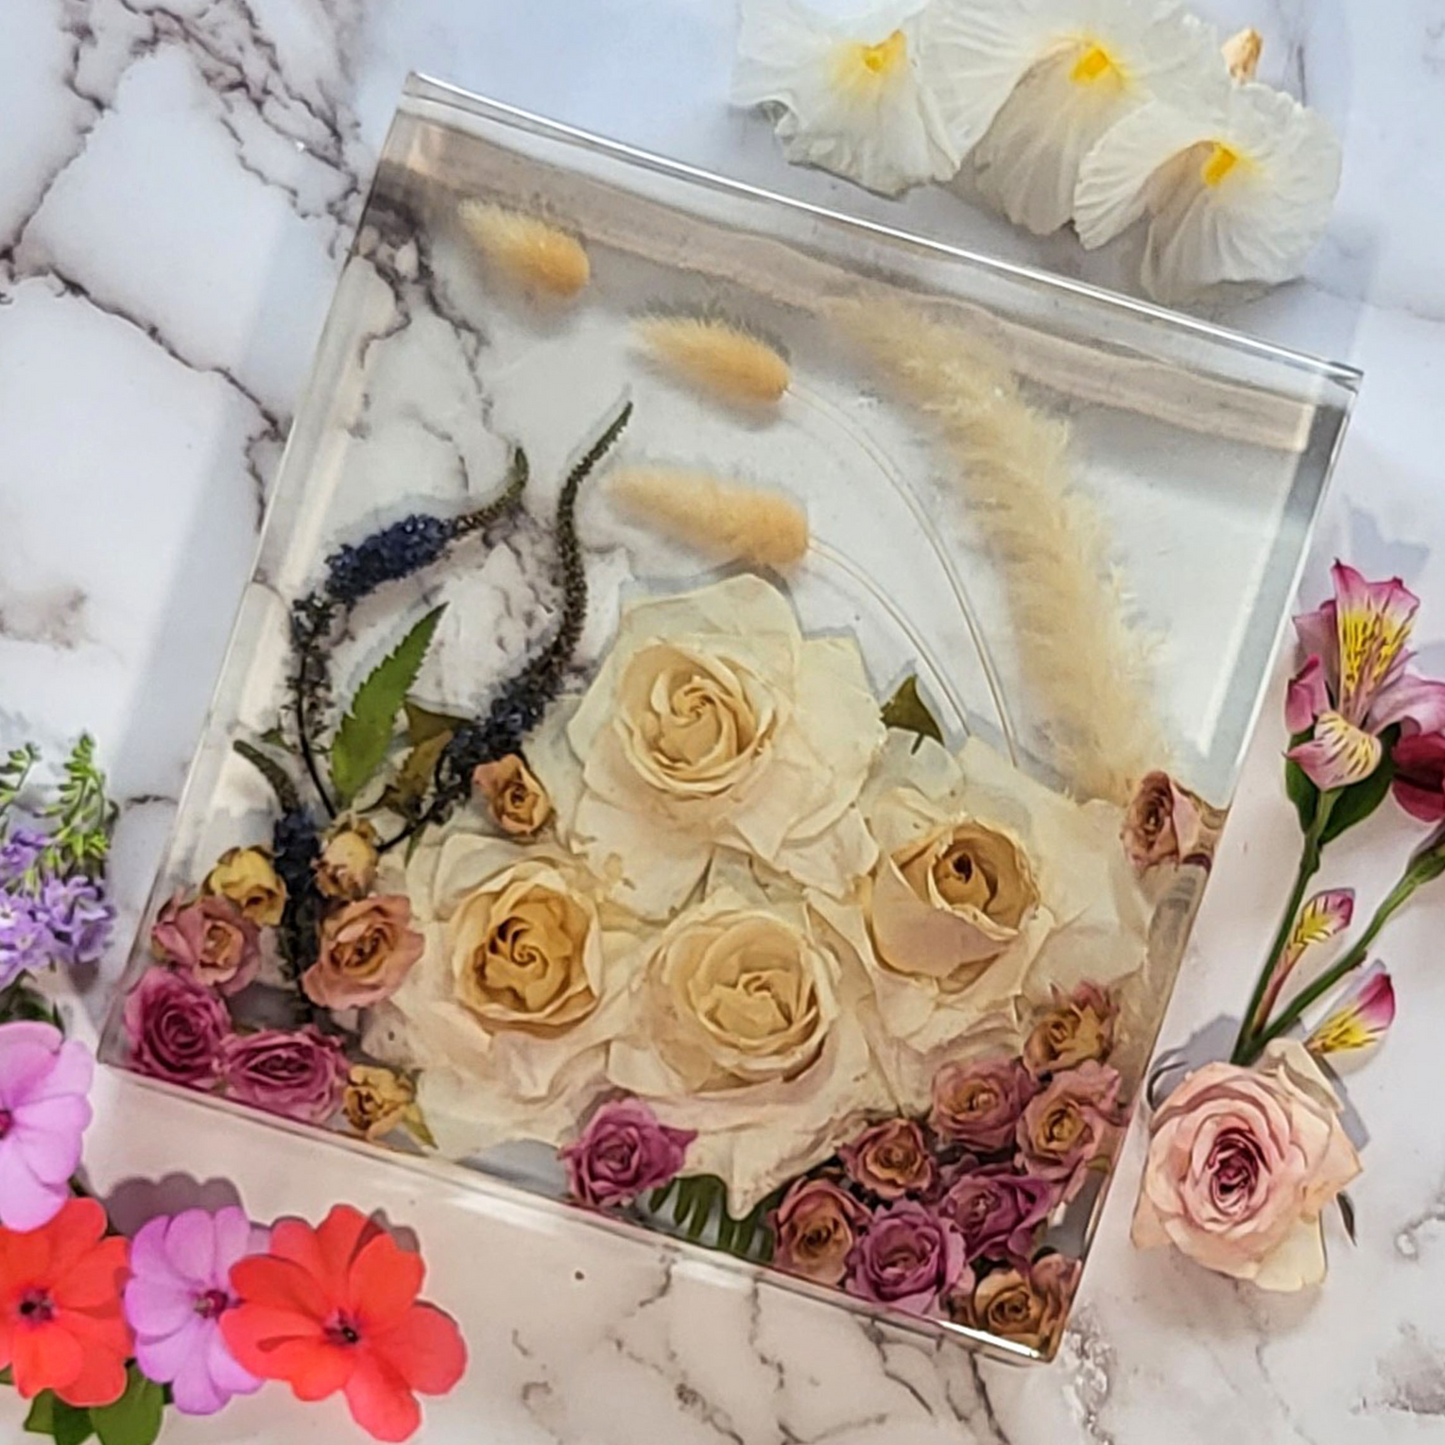 10"x10" 3D Resin Wedding Bouquet Preservation Save Your Wedding Flowers Forever Gift Keepsake - flofloflowery